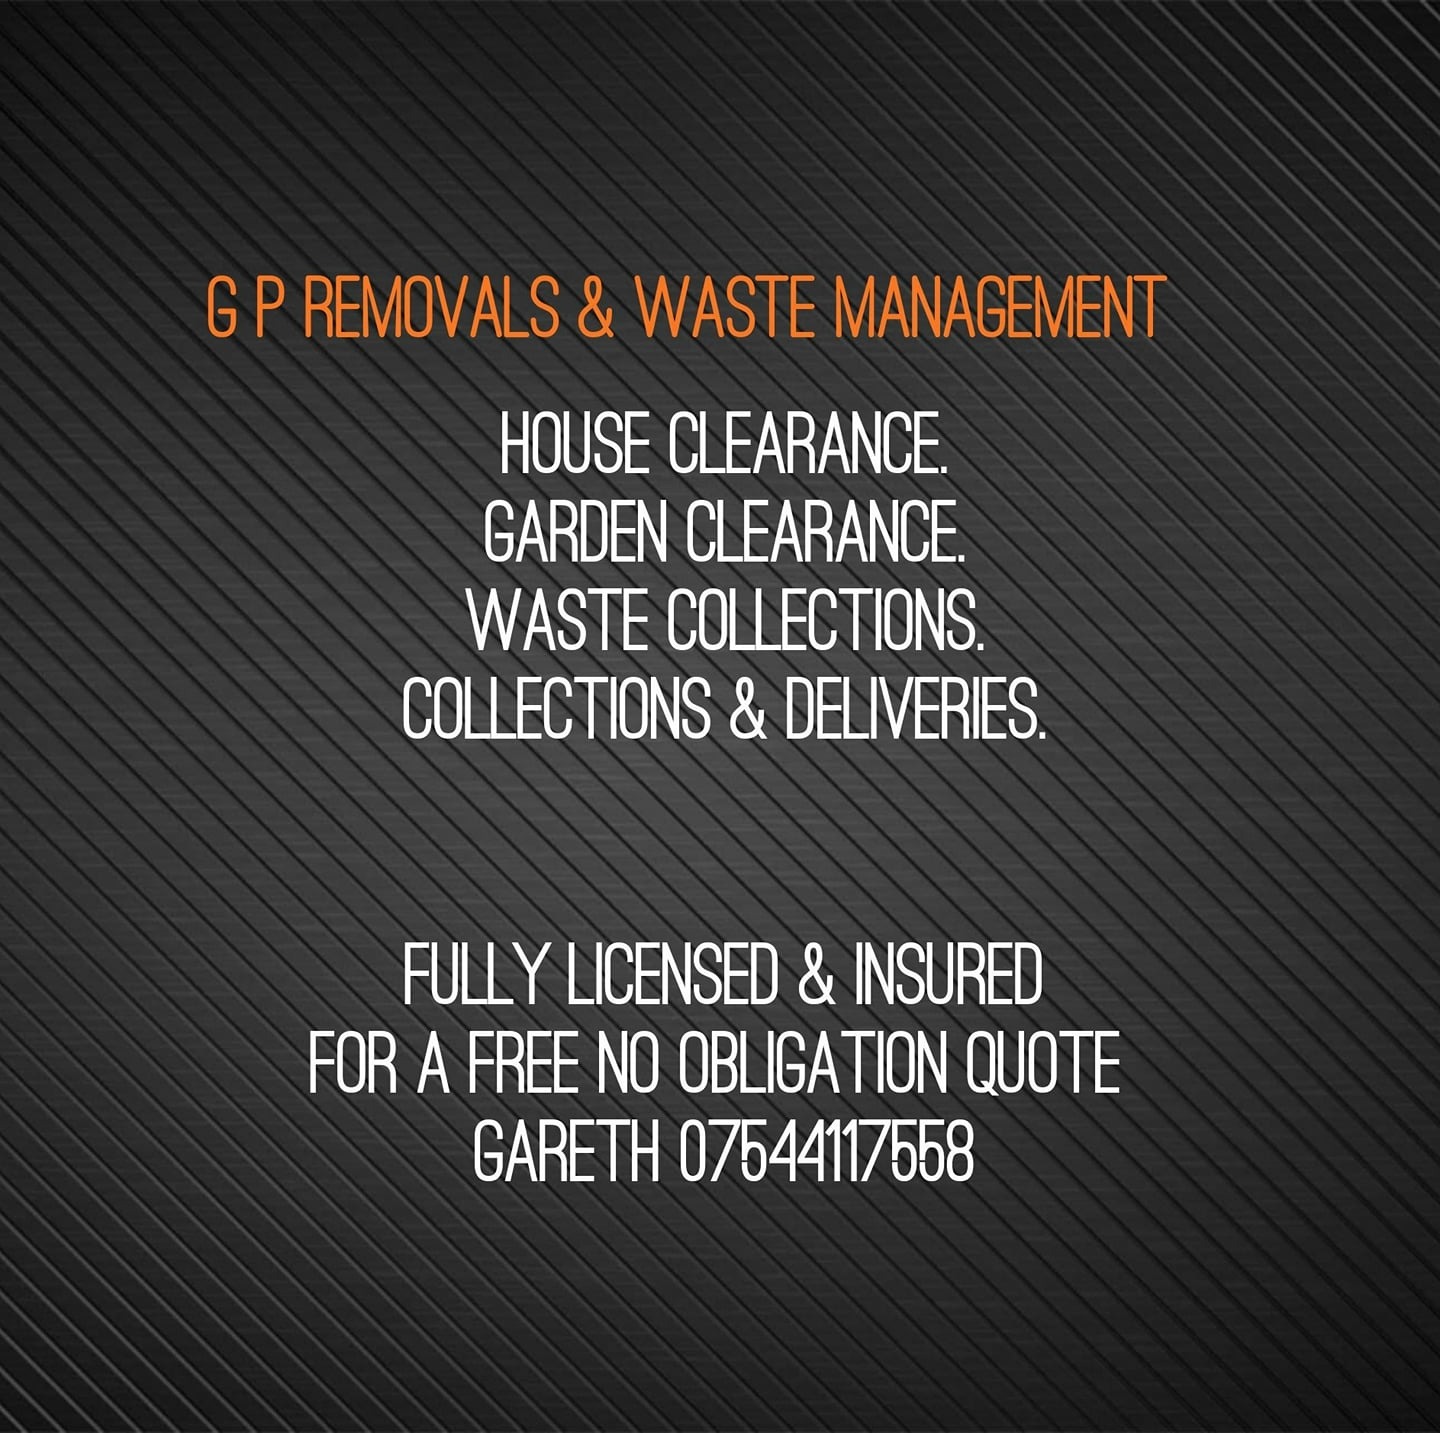 G P Removals & Waste Management